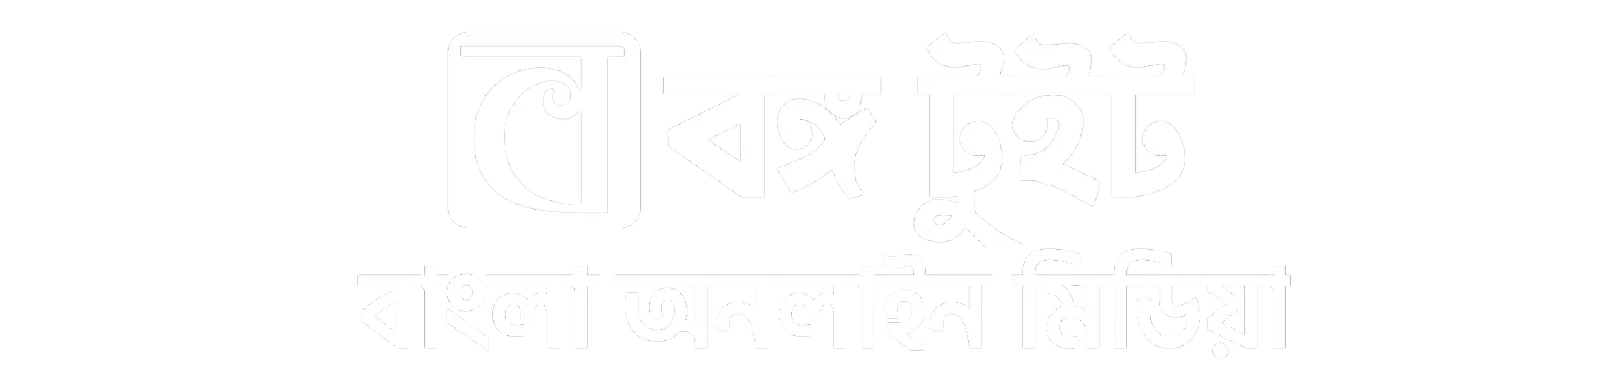 BONGO TWEET - A Bangladeshi Online Media Platform.